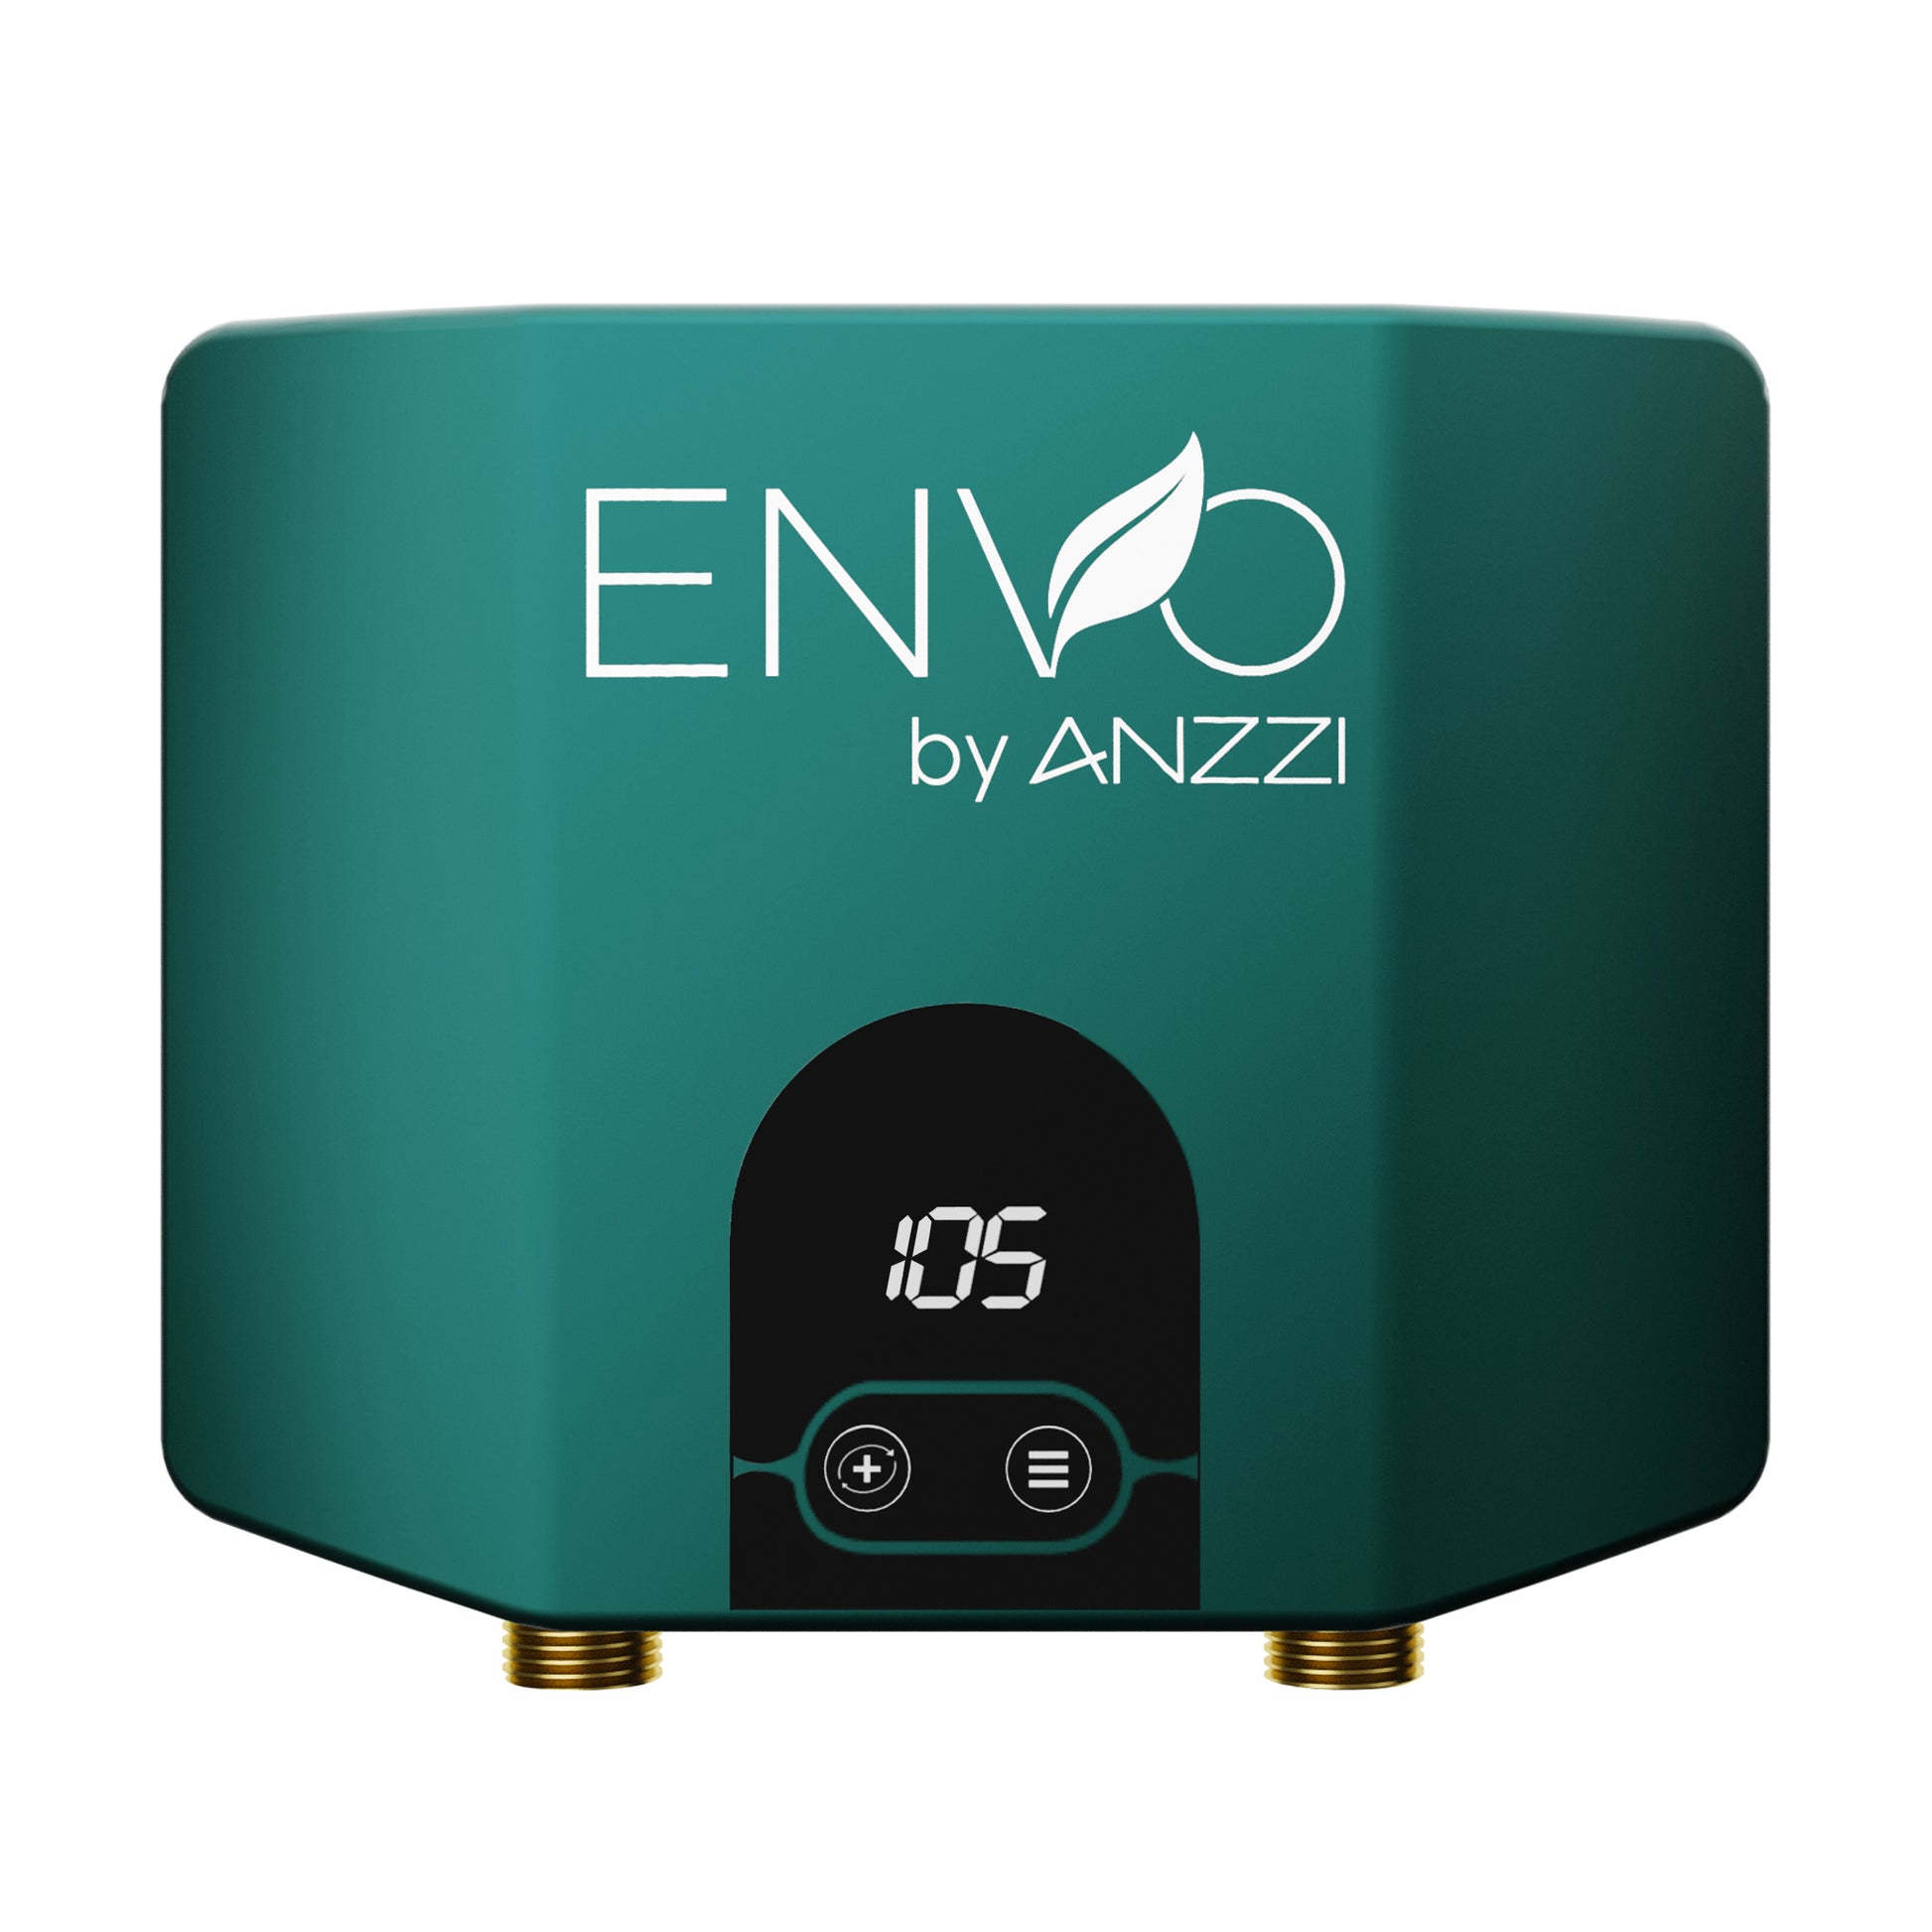 WH-AZ006-M1 - ENVO Ansen 6 kW Tankless Electric Water Heater